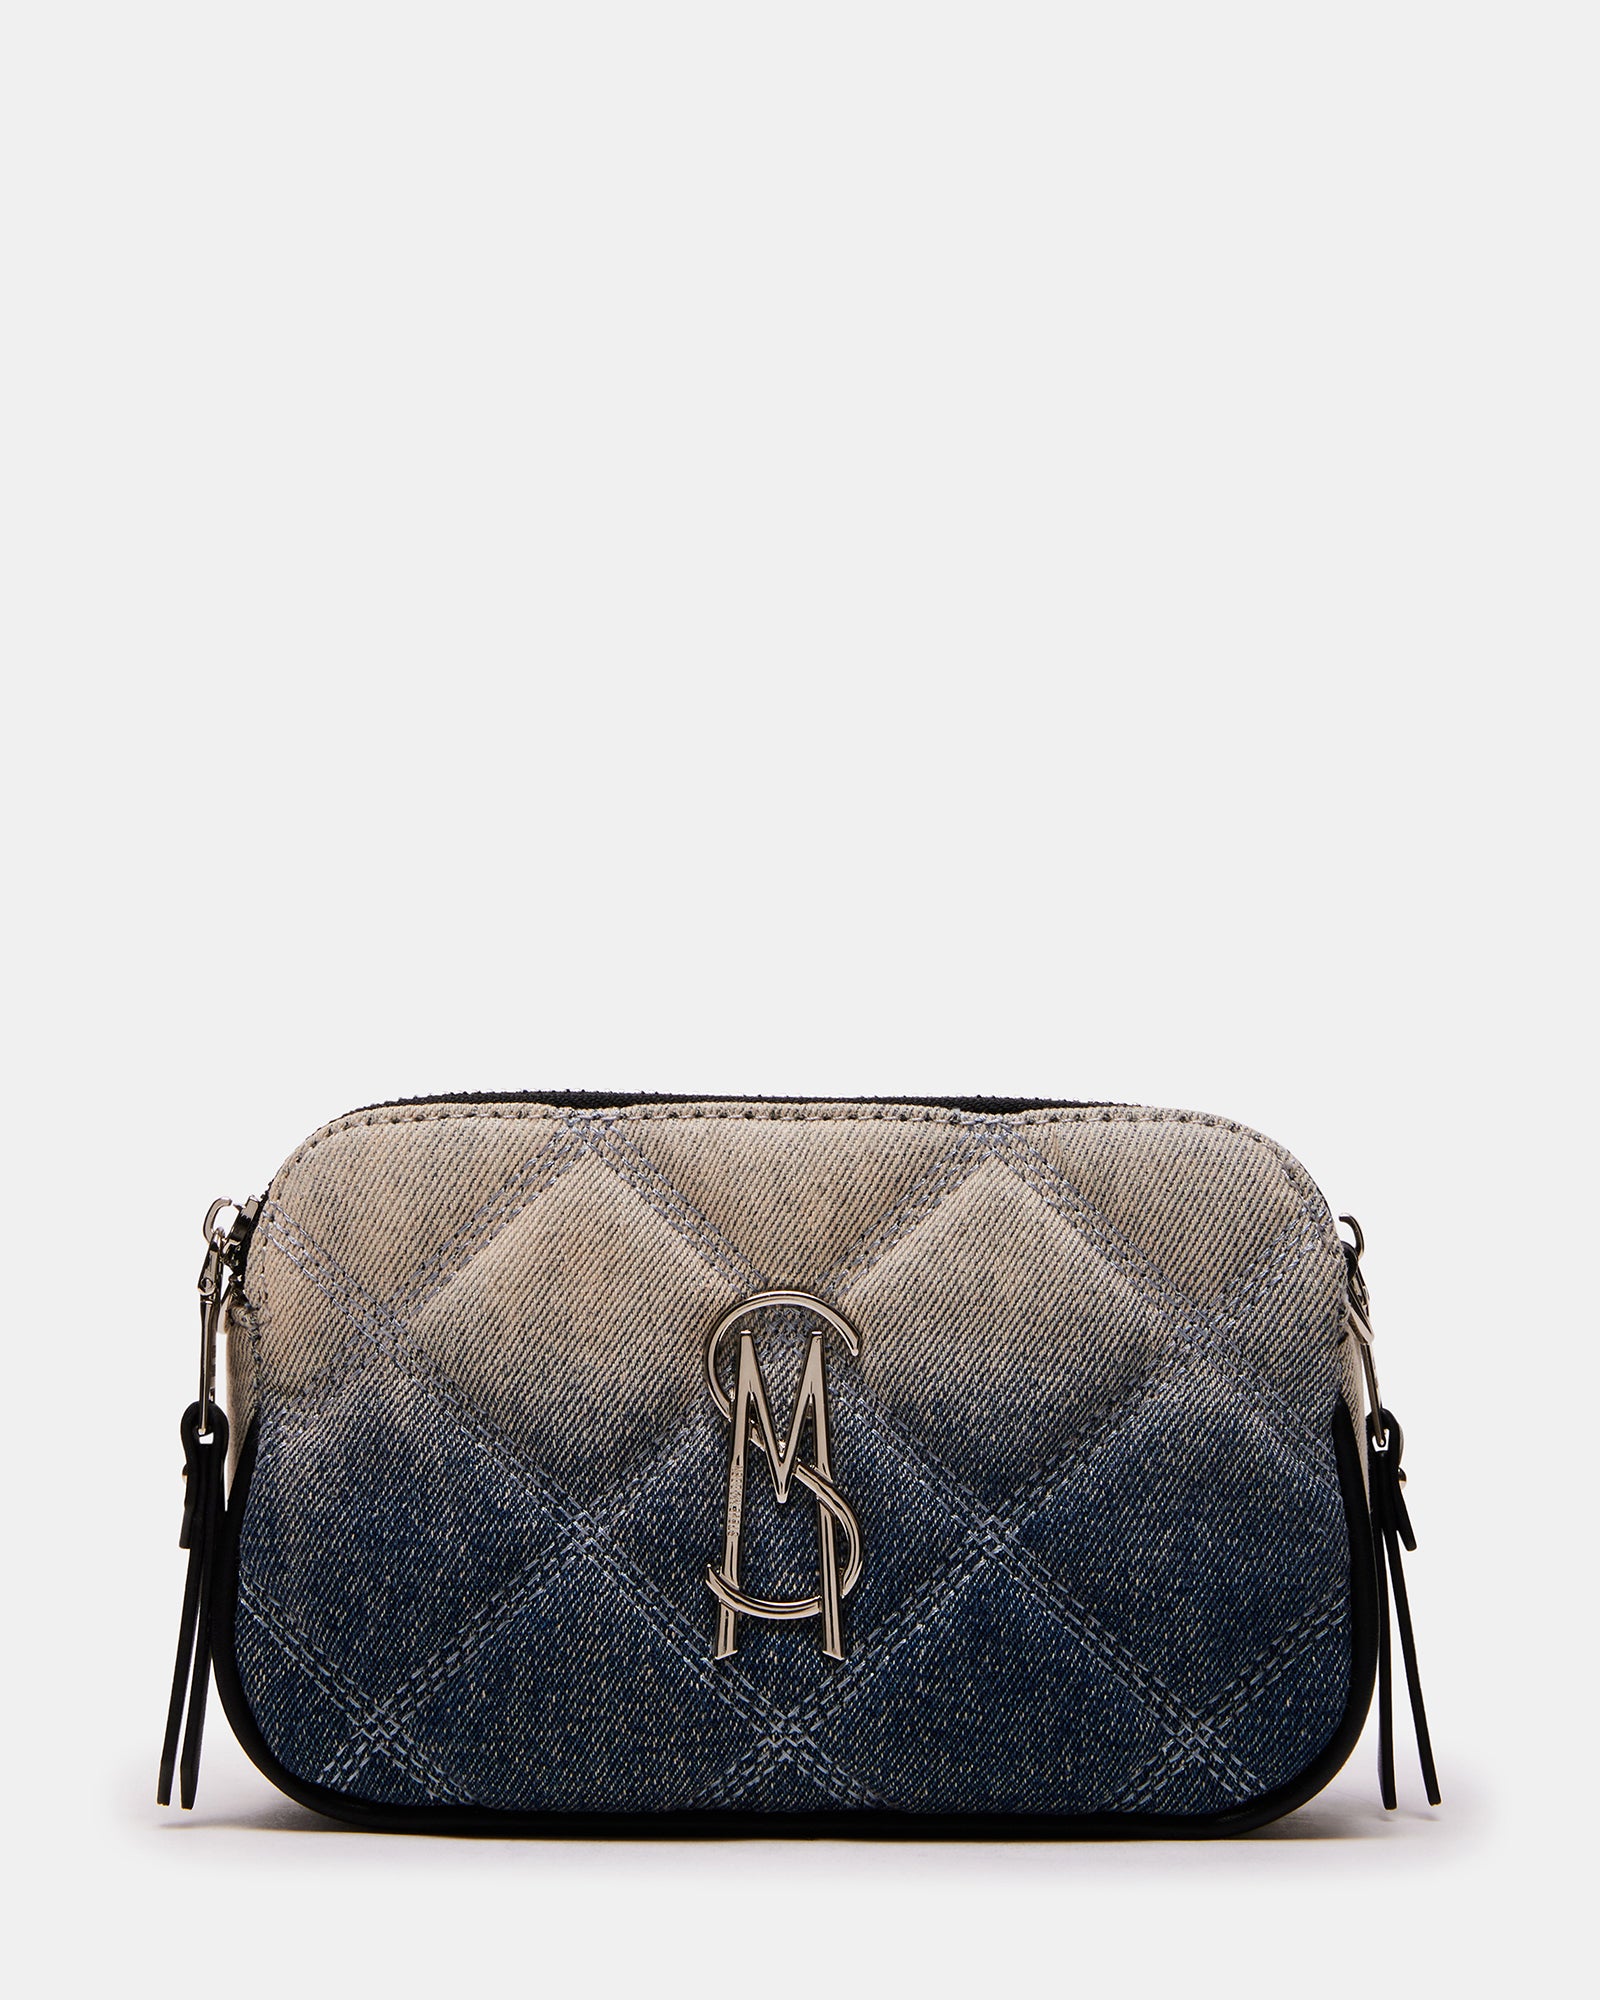 Louis Vuitton (Luggage, Baggage) 1969 Handbag, Train-Case